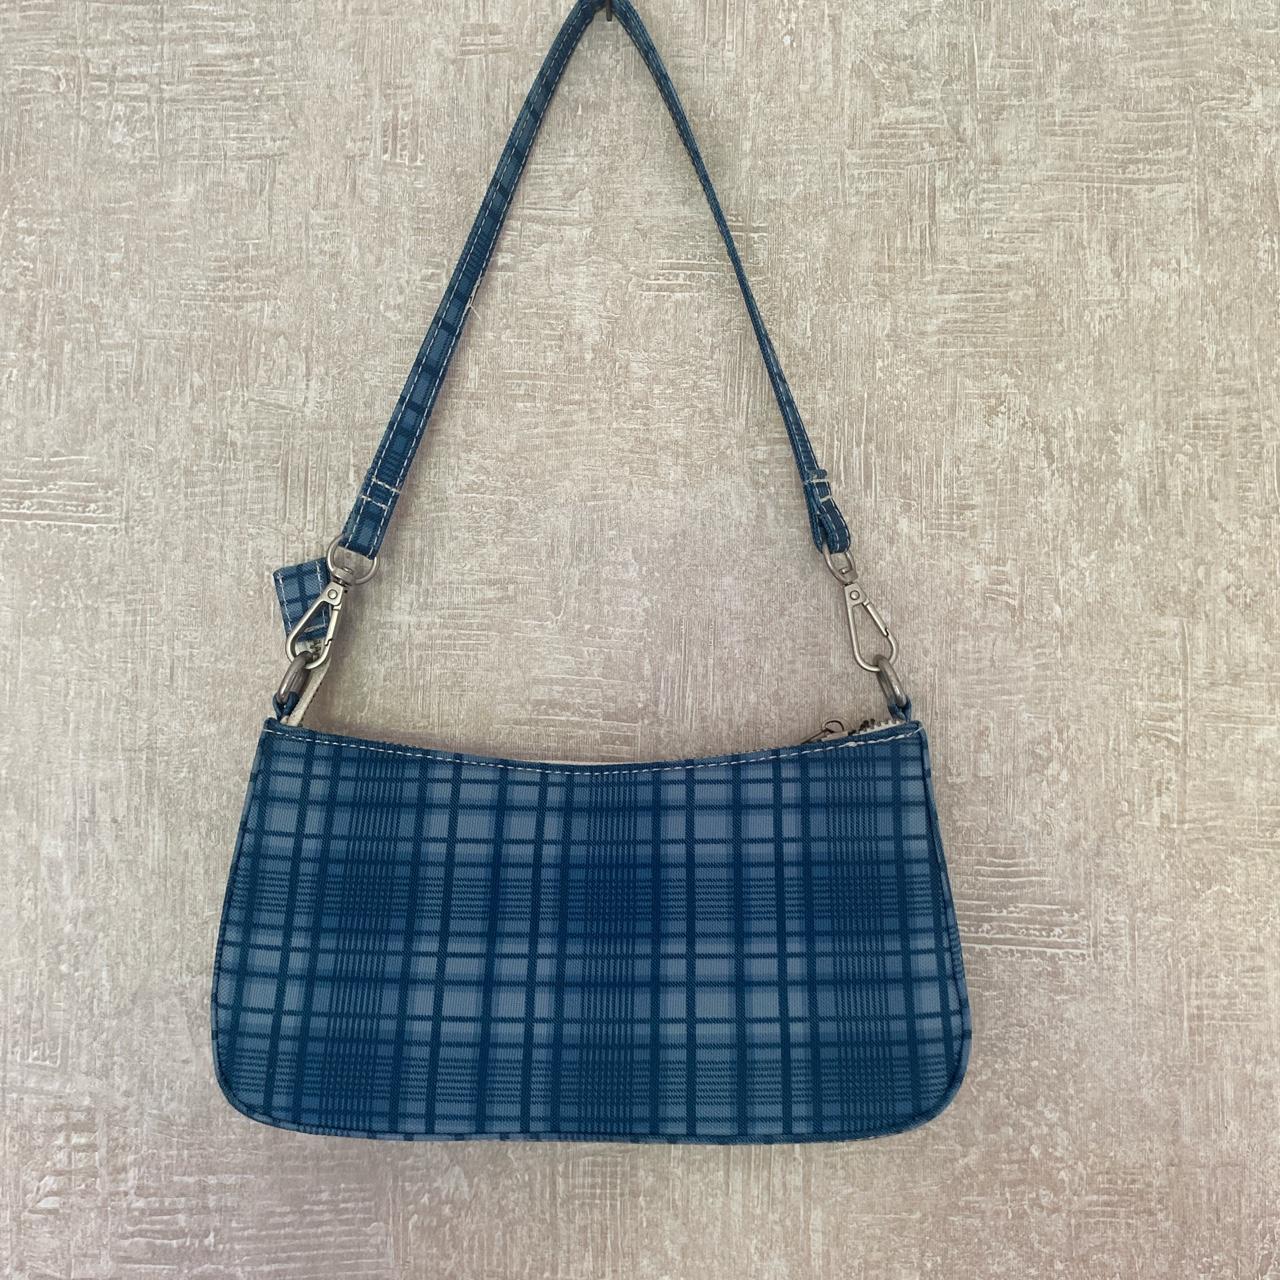 SHEIN blue plaid purse - Depop